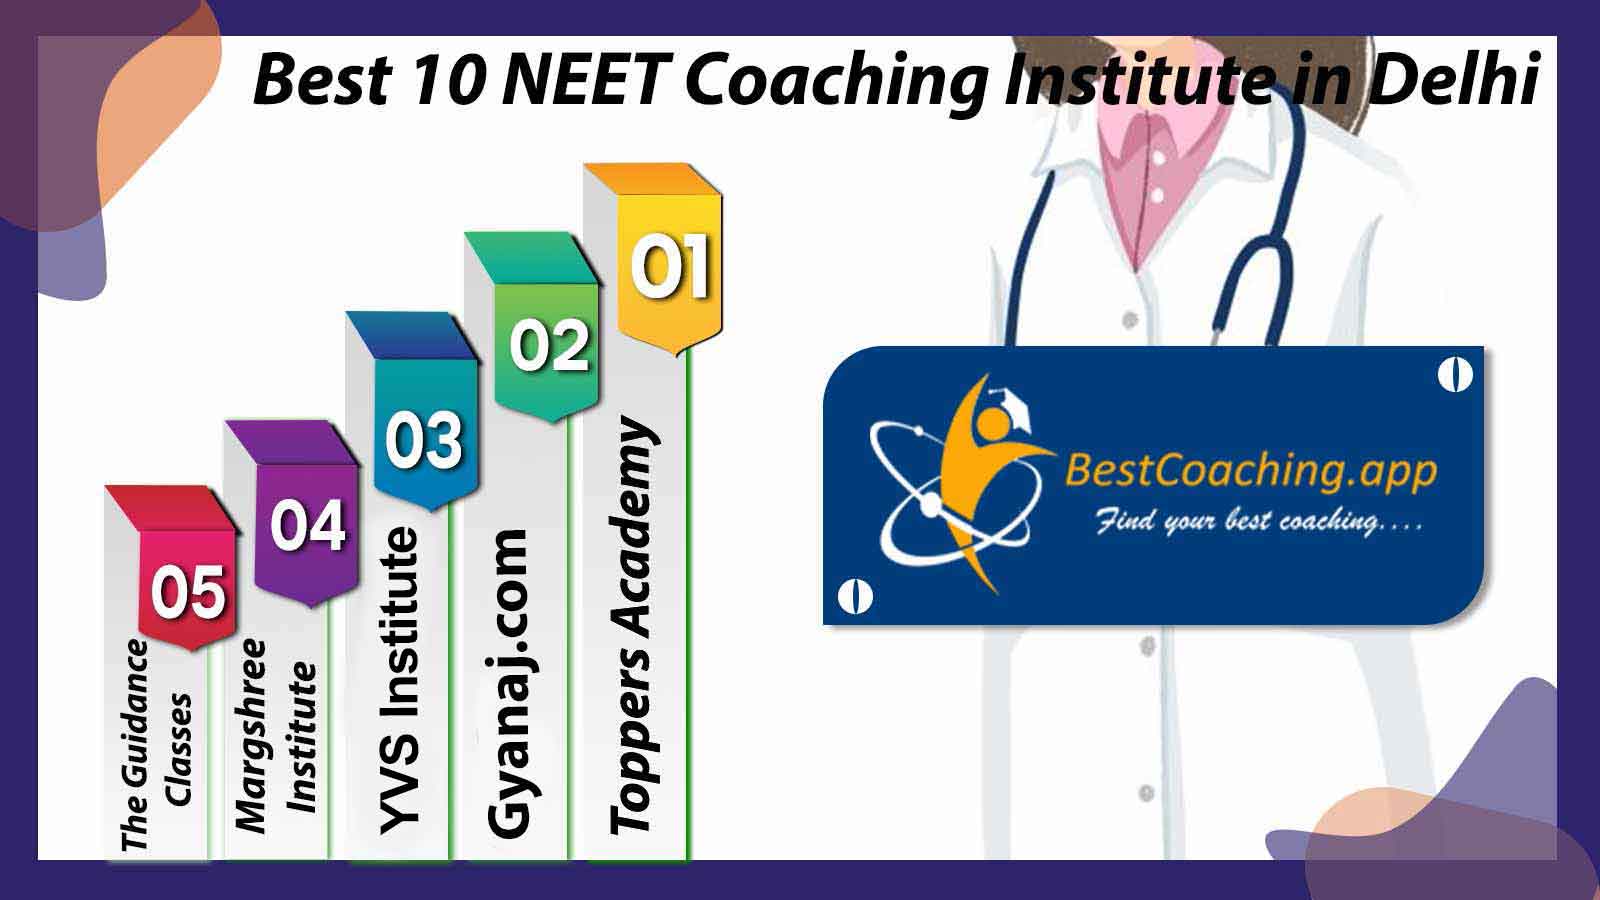 Best 10 NEET Coaching Institute In Delhi 